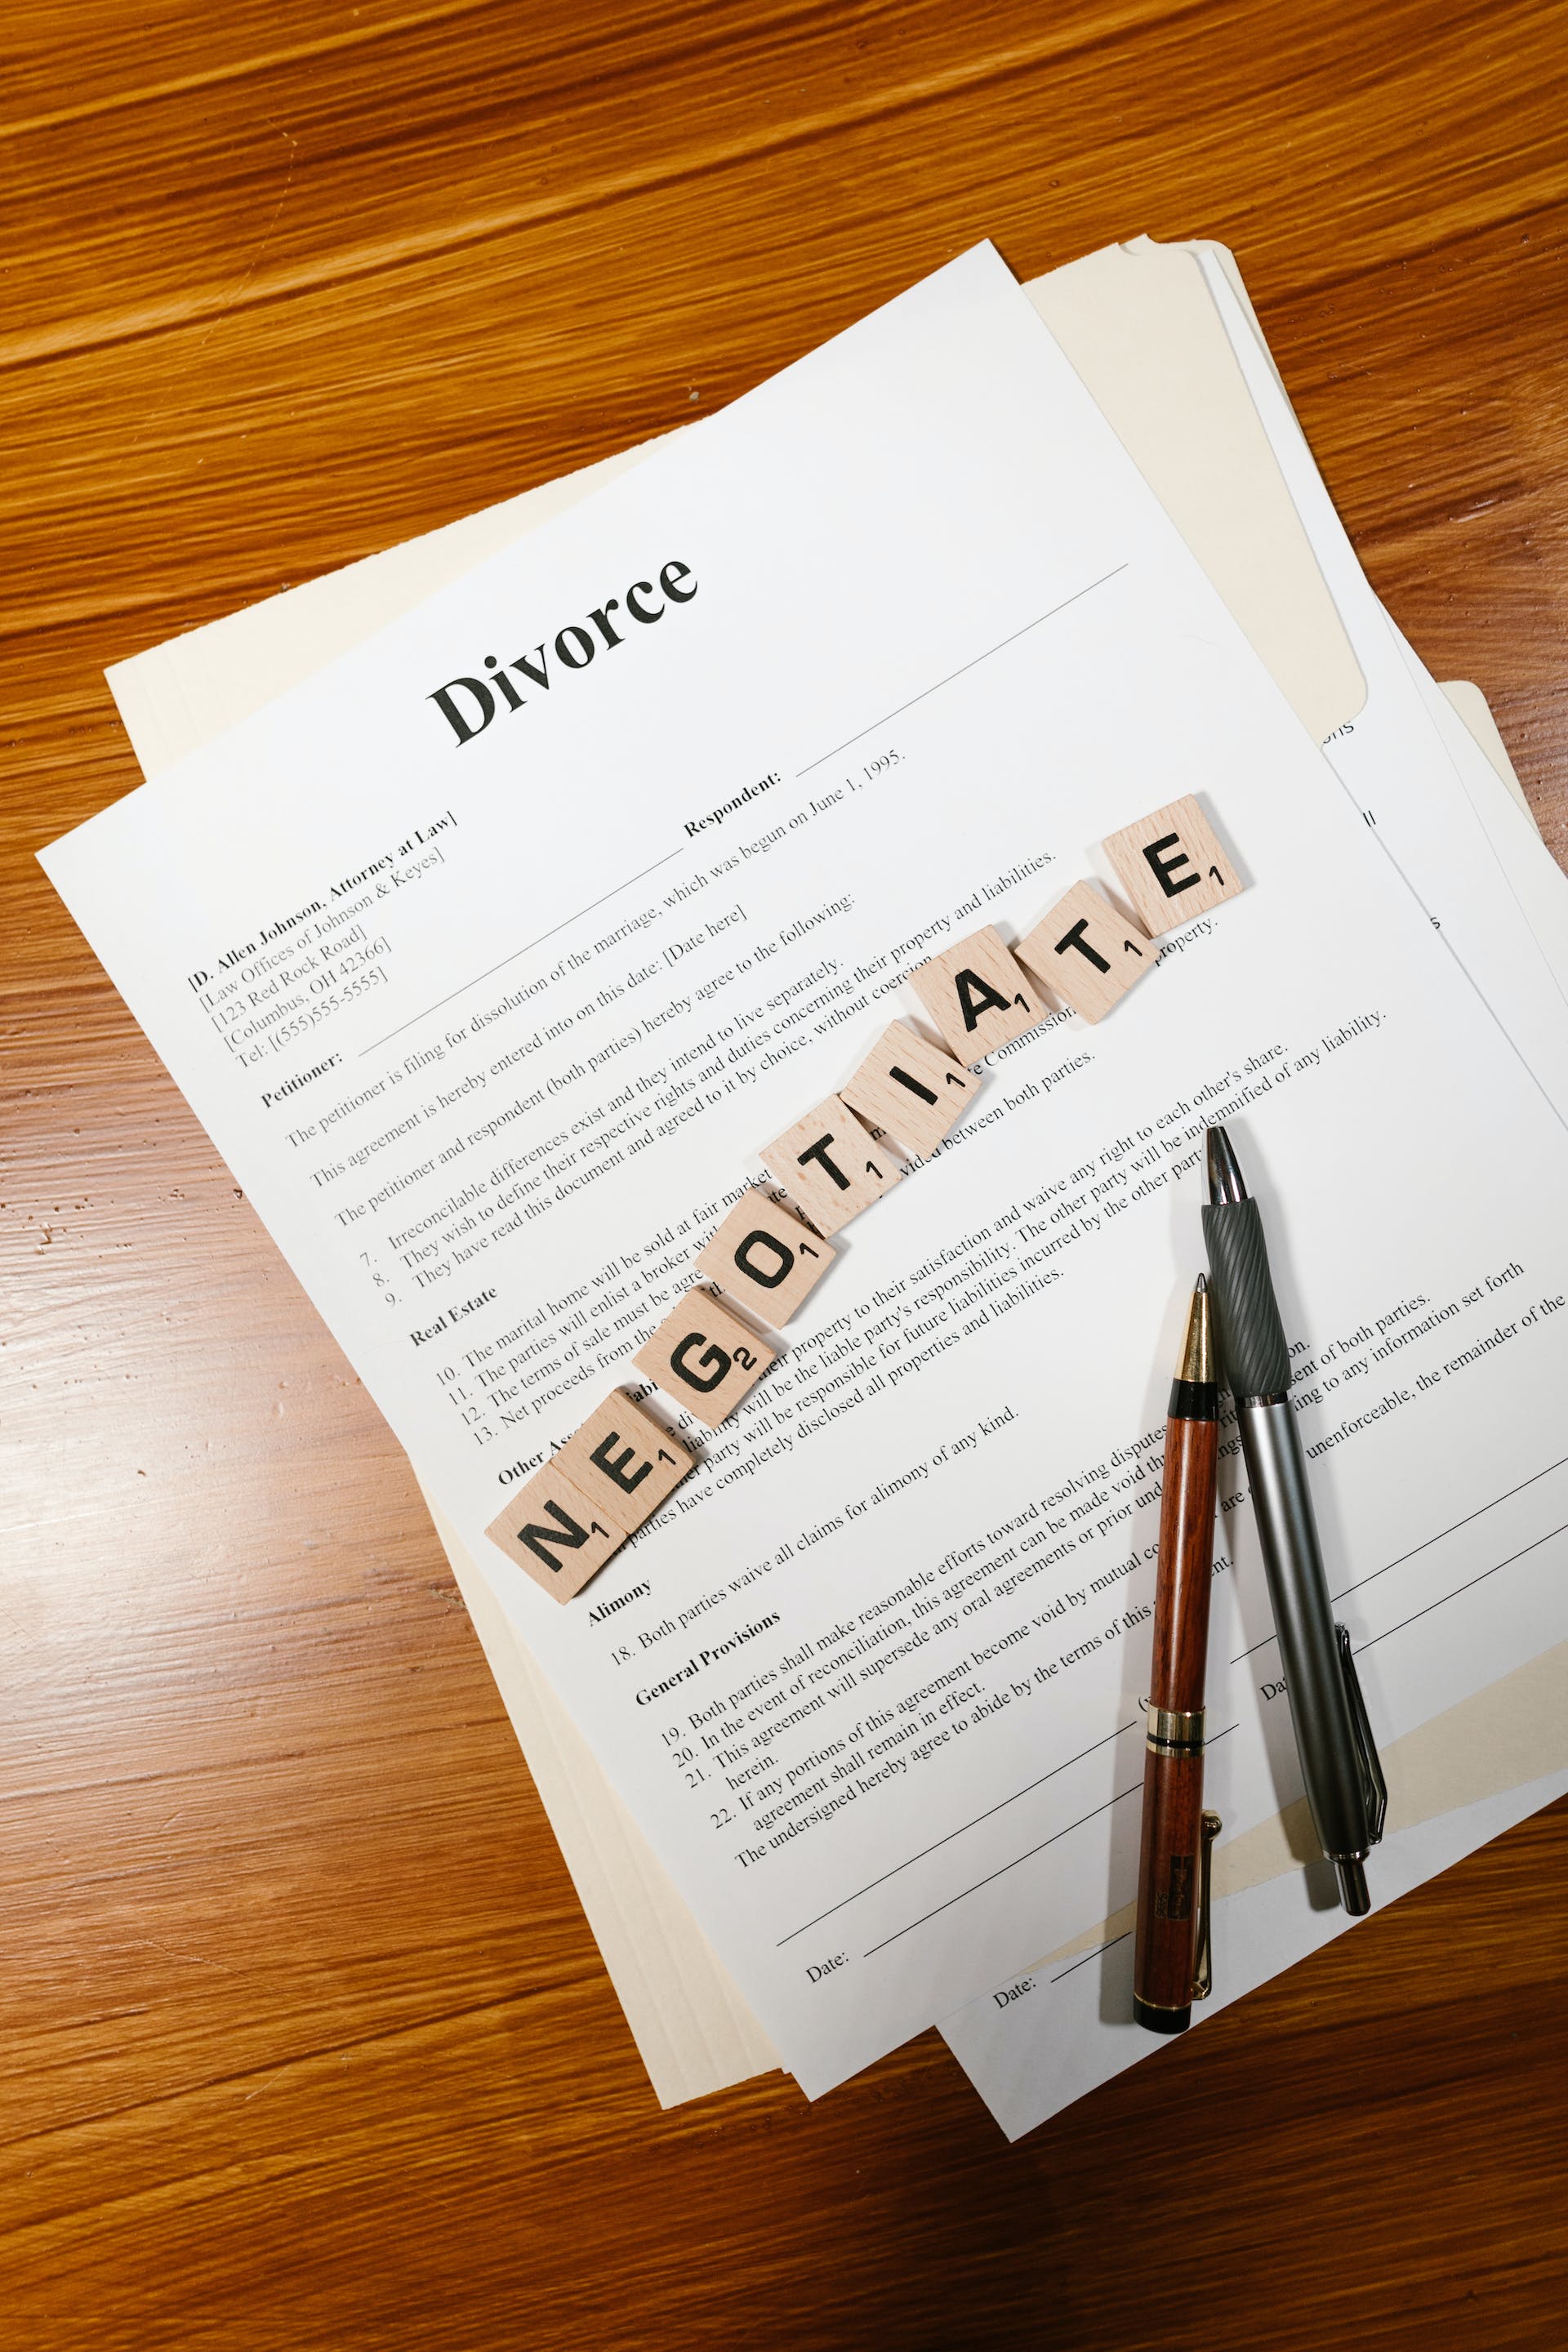 A divorce agreement on paper | Source: Pexels